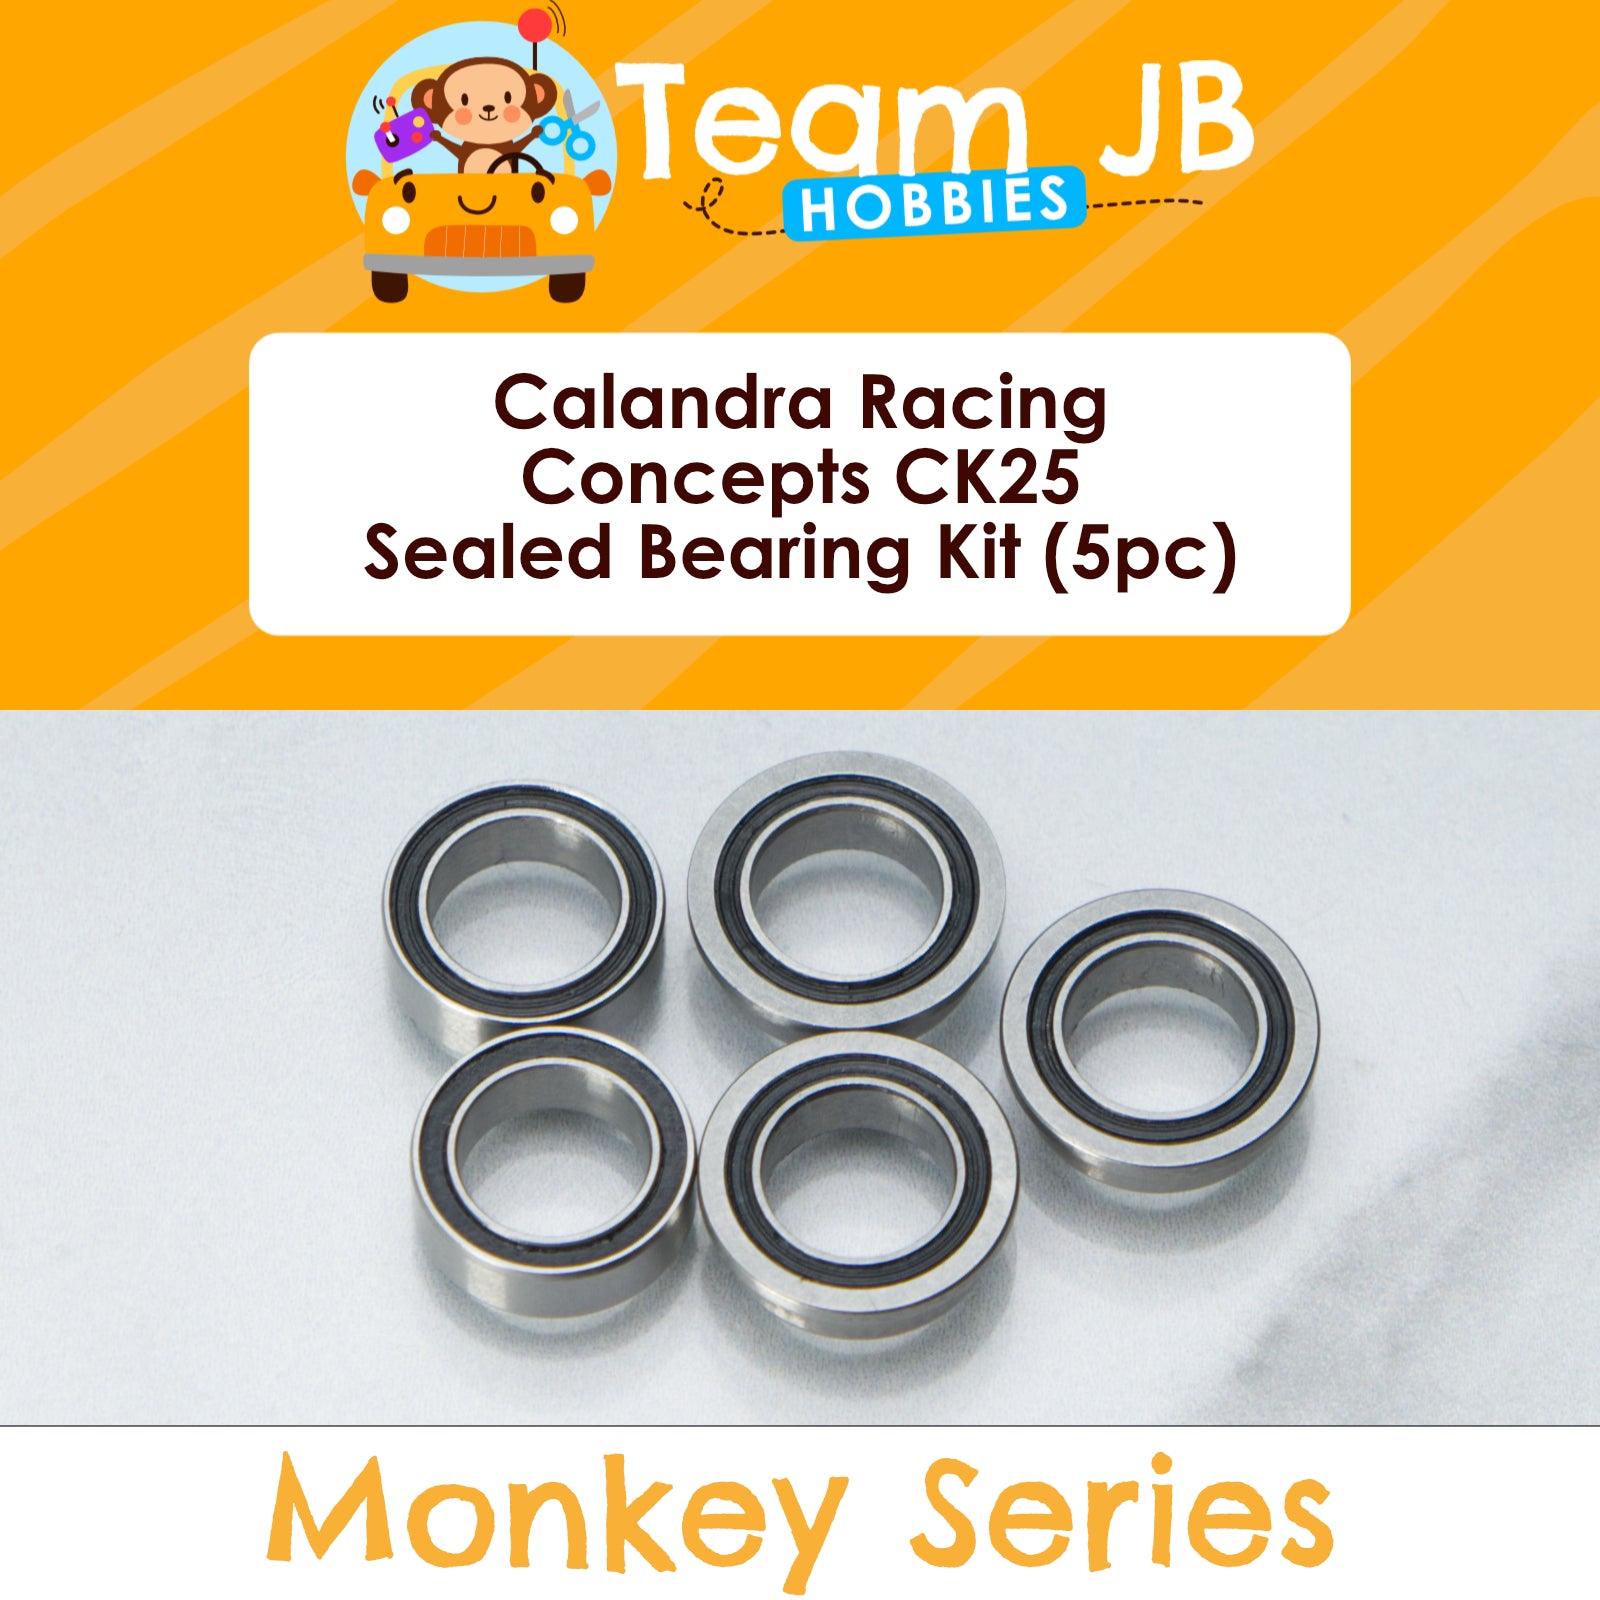 Calandra Racing Concepts CK25 - Sealed Bearing Kit